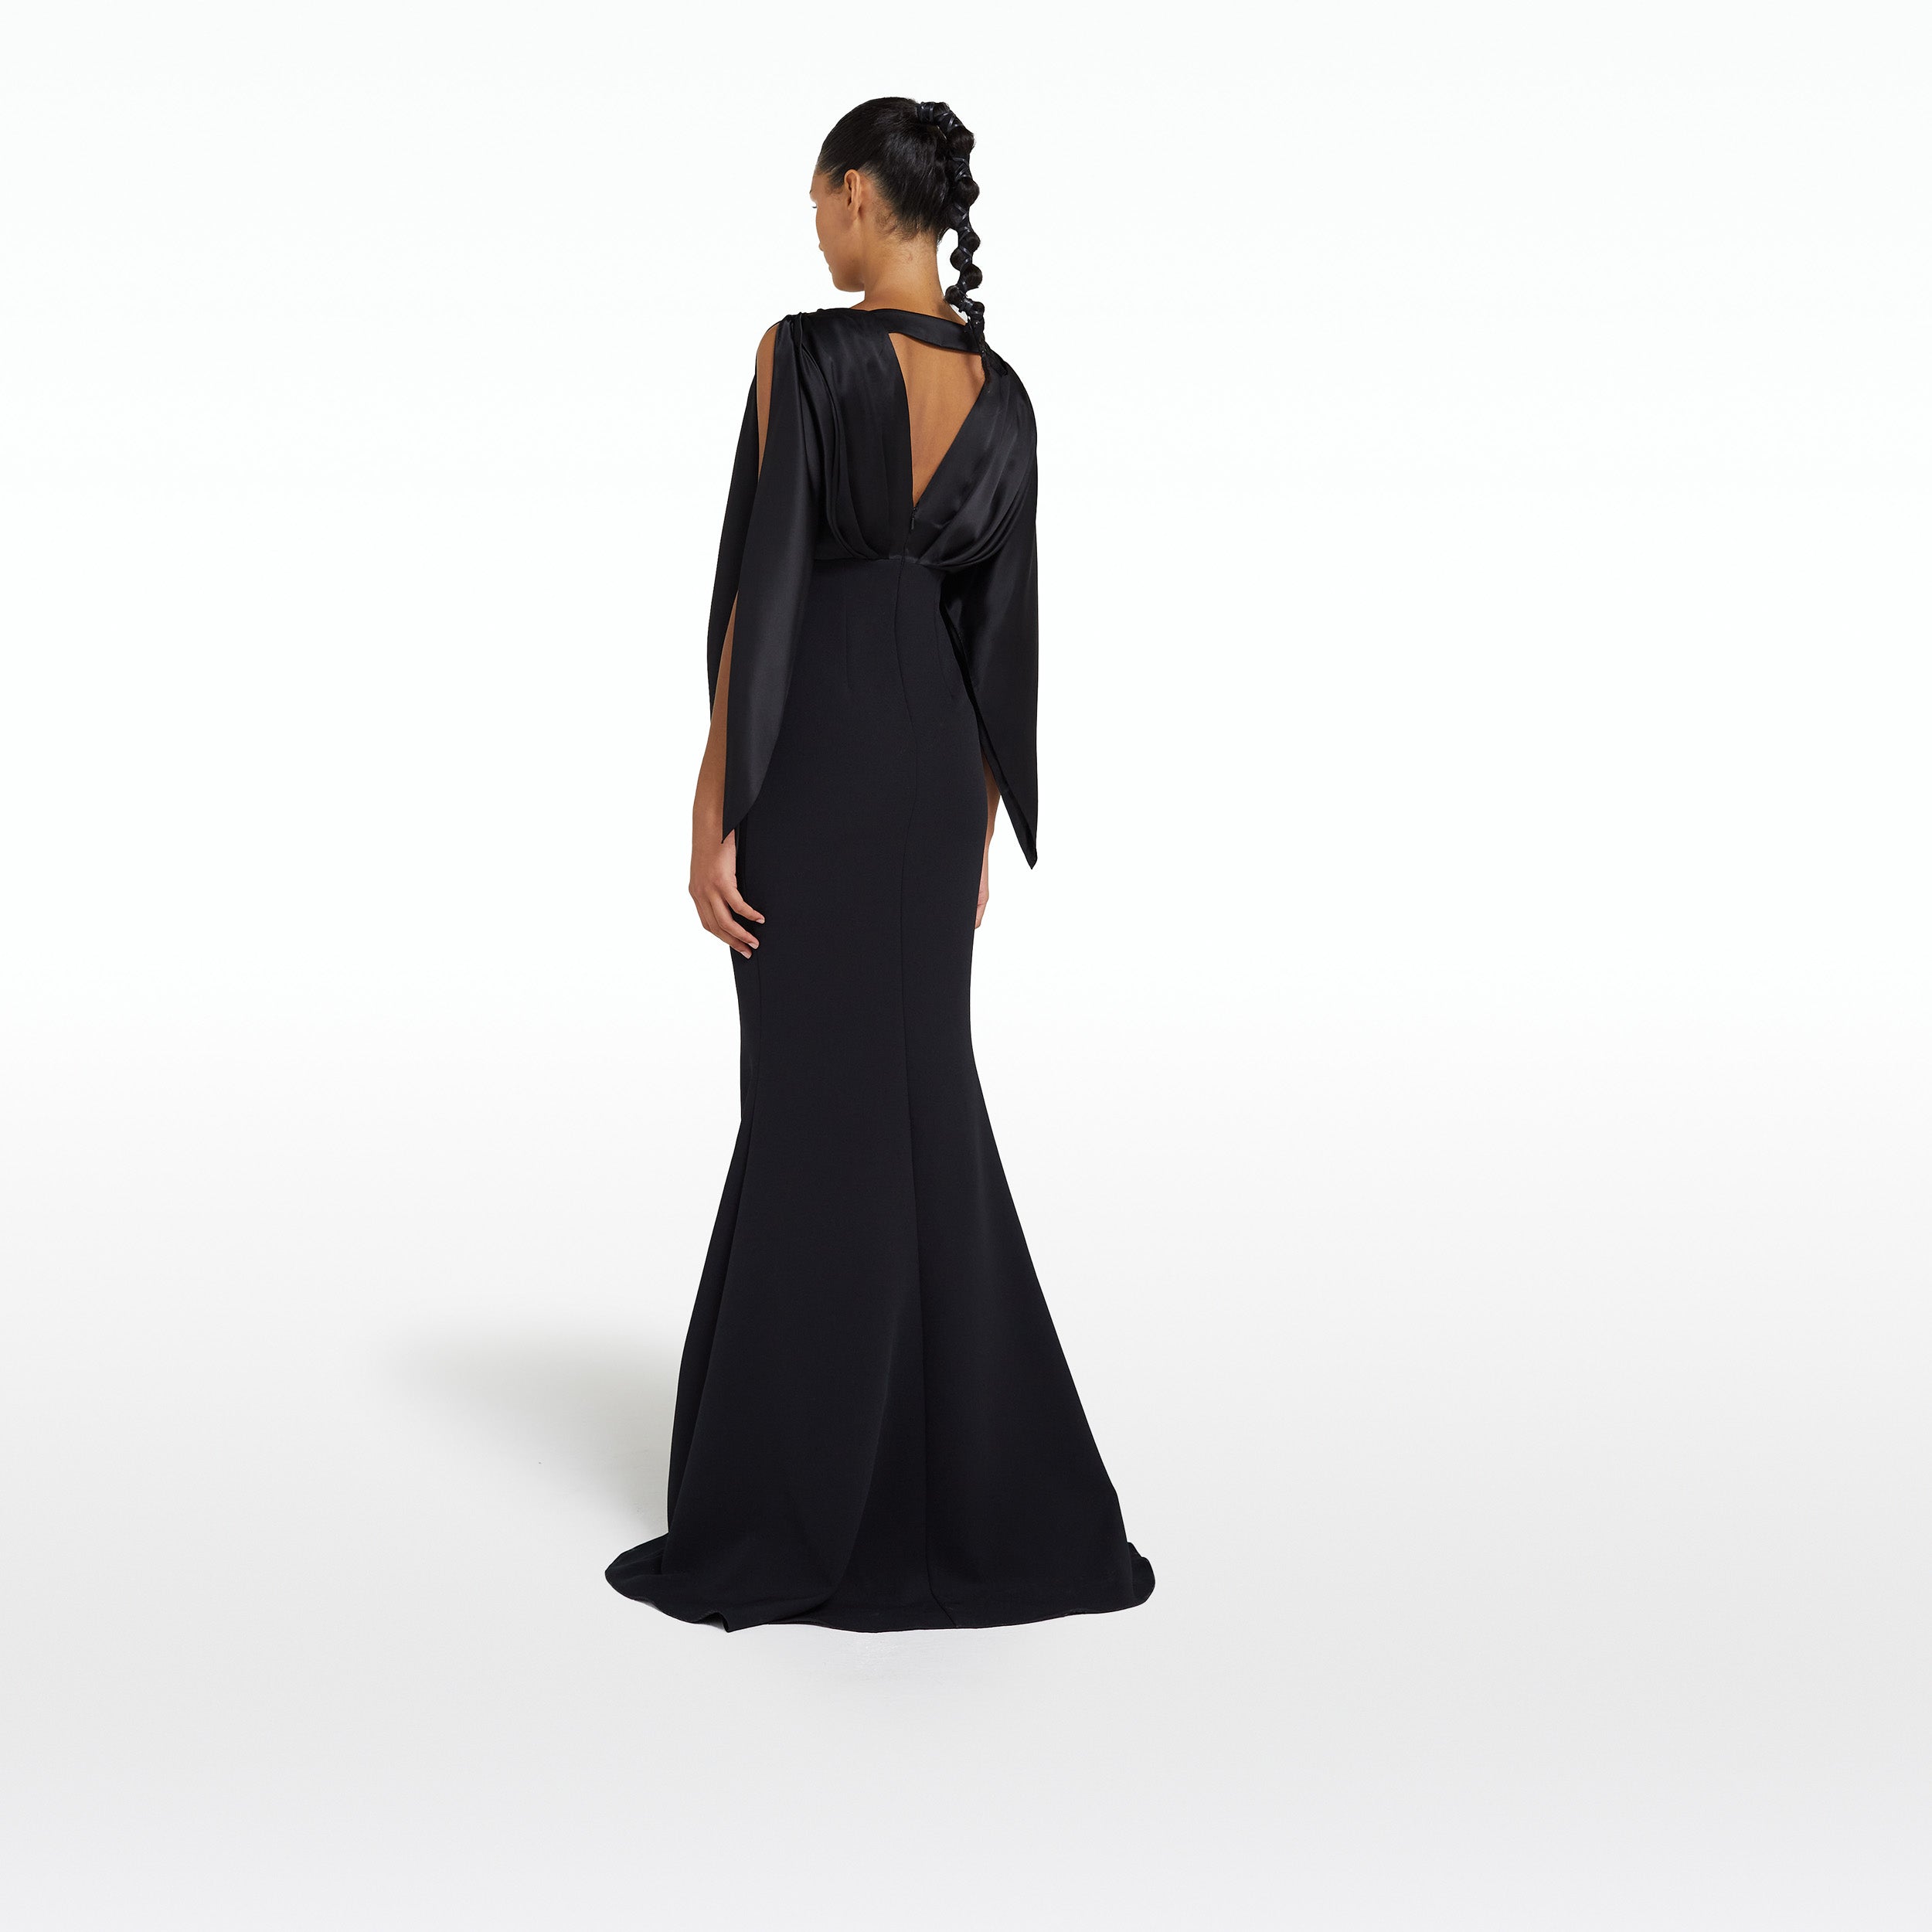 Amina Black Long Dress